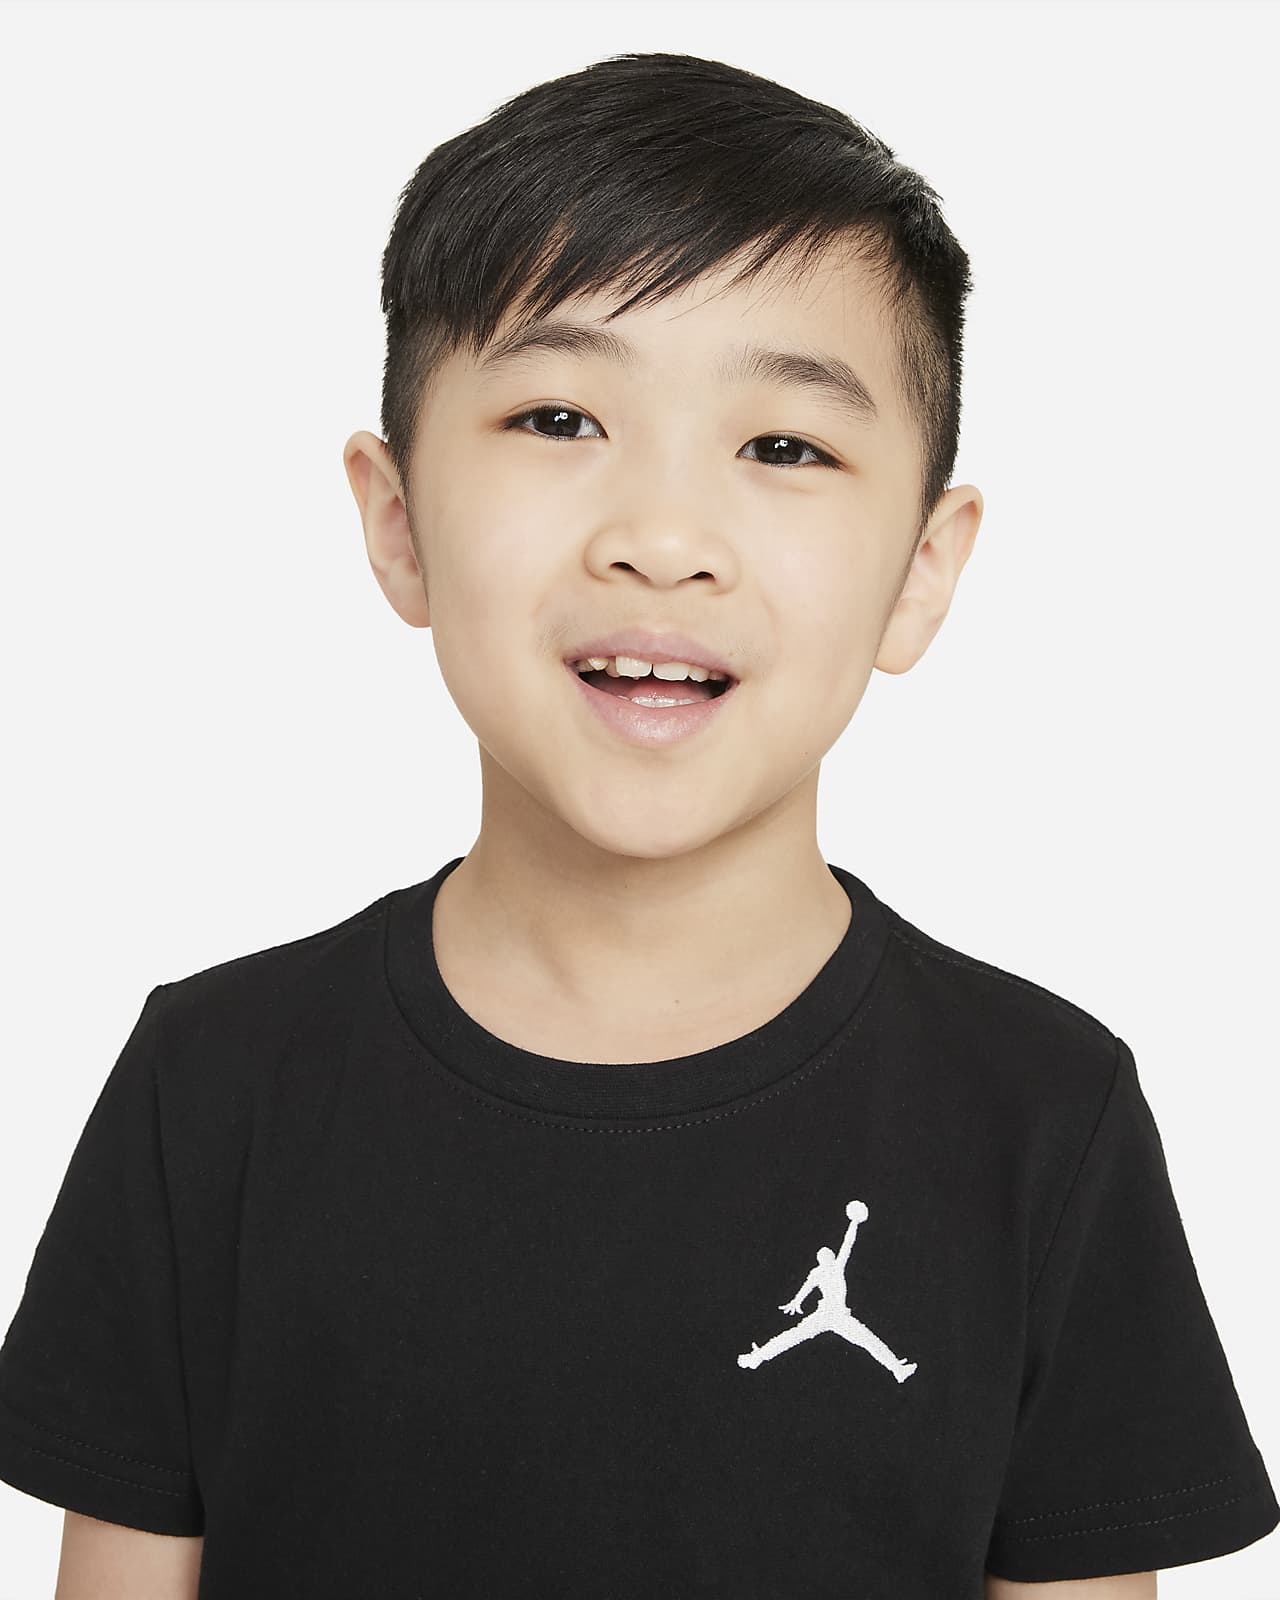 Jordan Younger Kids' T Shirt. Nike NL